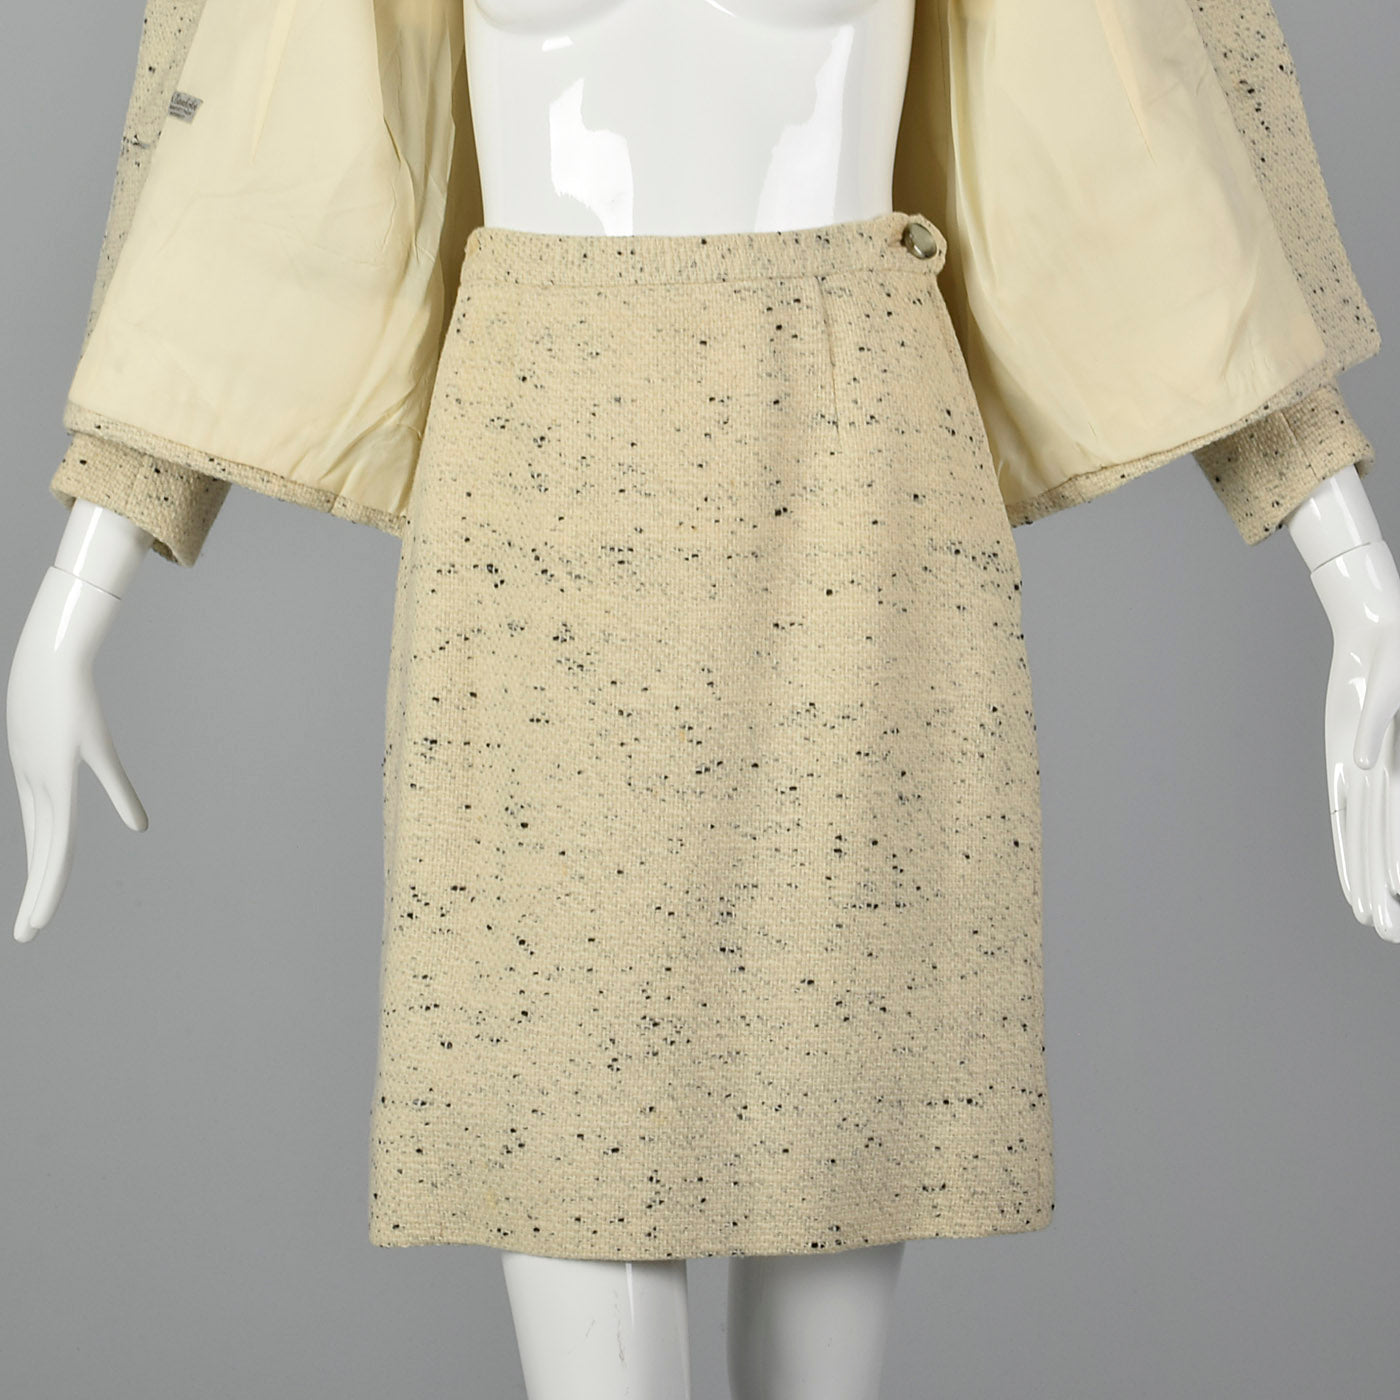 1960s Cream Skirt Suit with Navy Blue Flecks